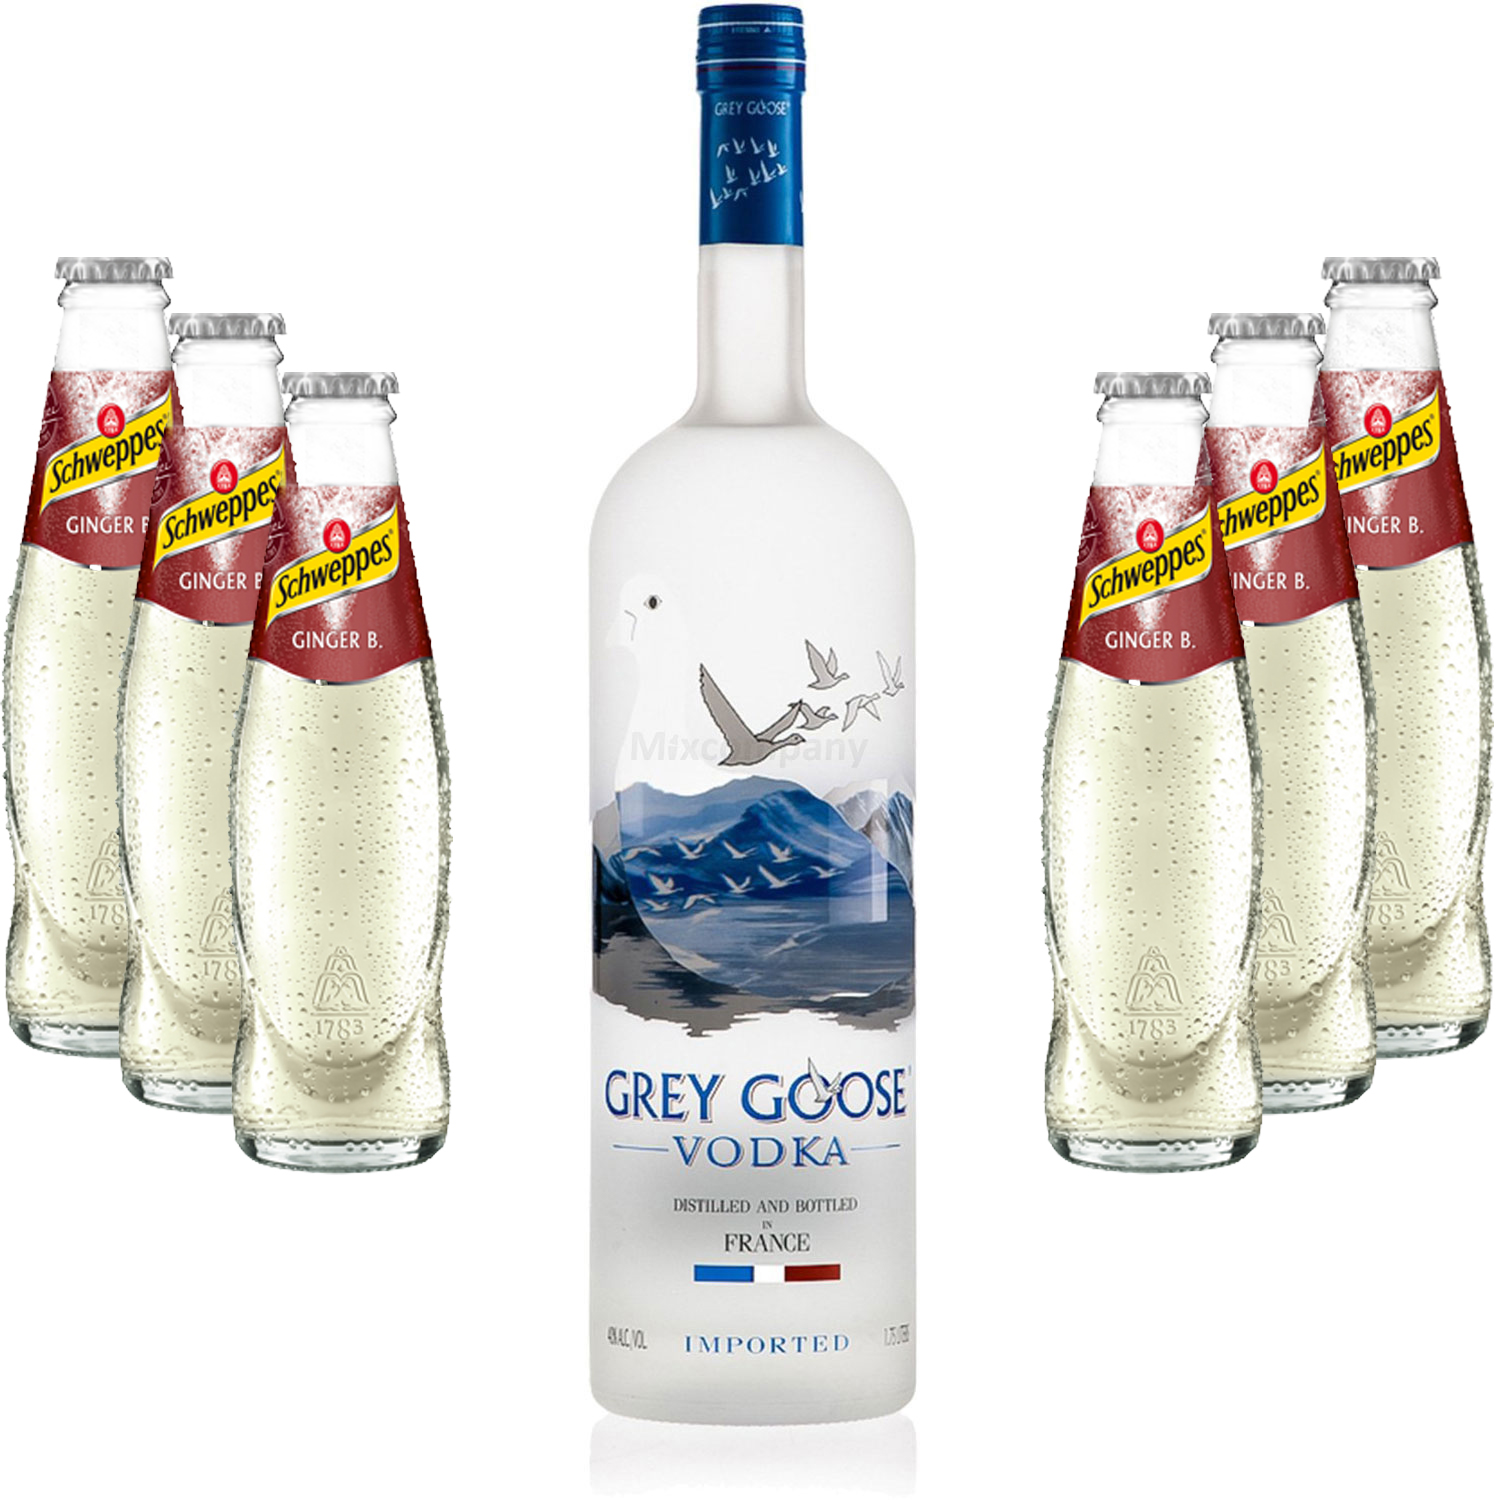 Moscow Mule Set - Grey Goose Vodka 0,7l 700ml (40% Vol) + 6x Schweppes Ginger Beer 200ml - Inkl. Pfand MEHRWEG